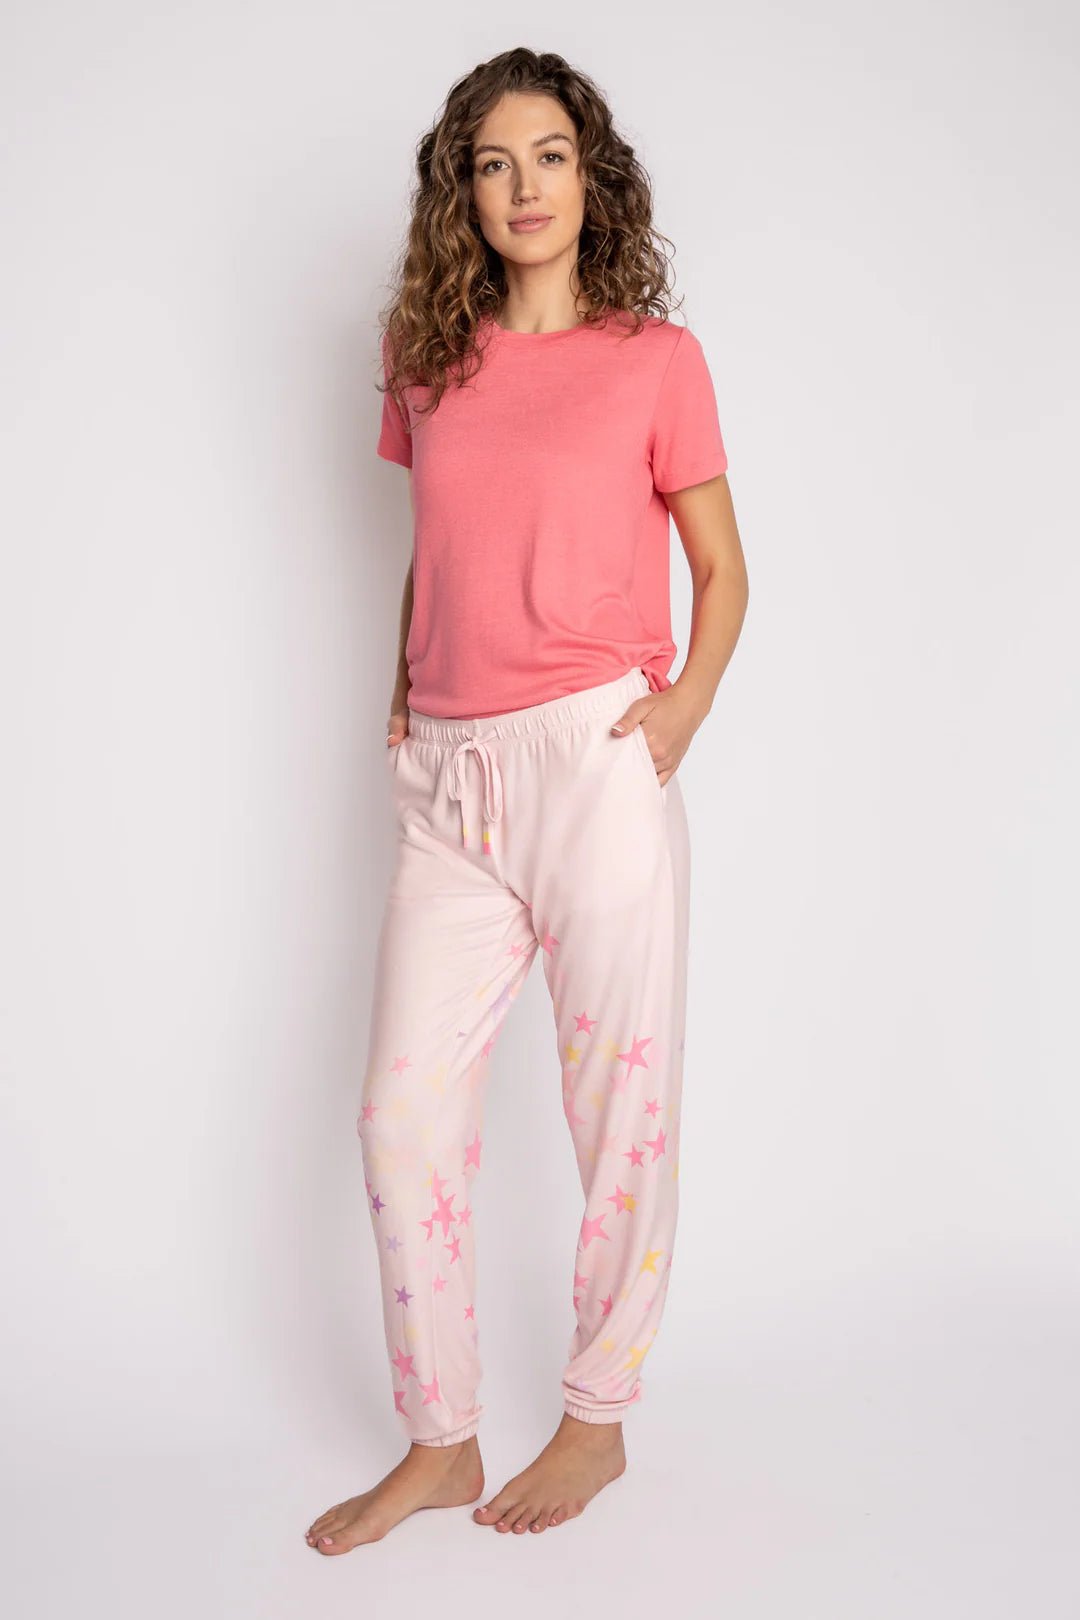 Shop PJ Salvage Peach Party Panded Pyjama Pants - Premium PJ Pants from PJ Salvage Online now at Spoiled Brat 